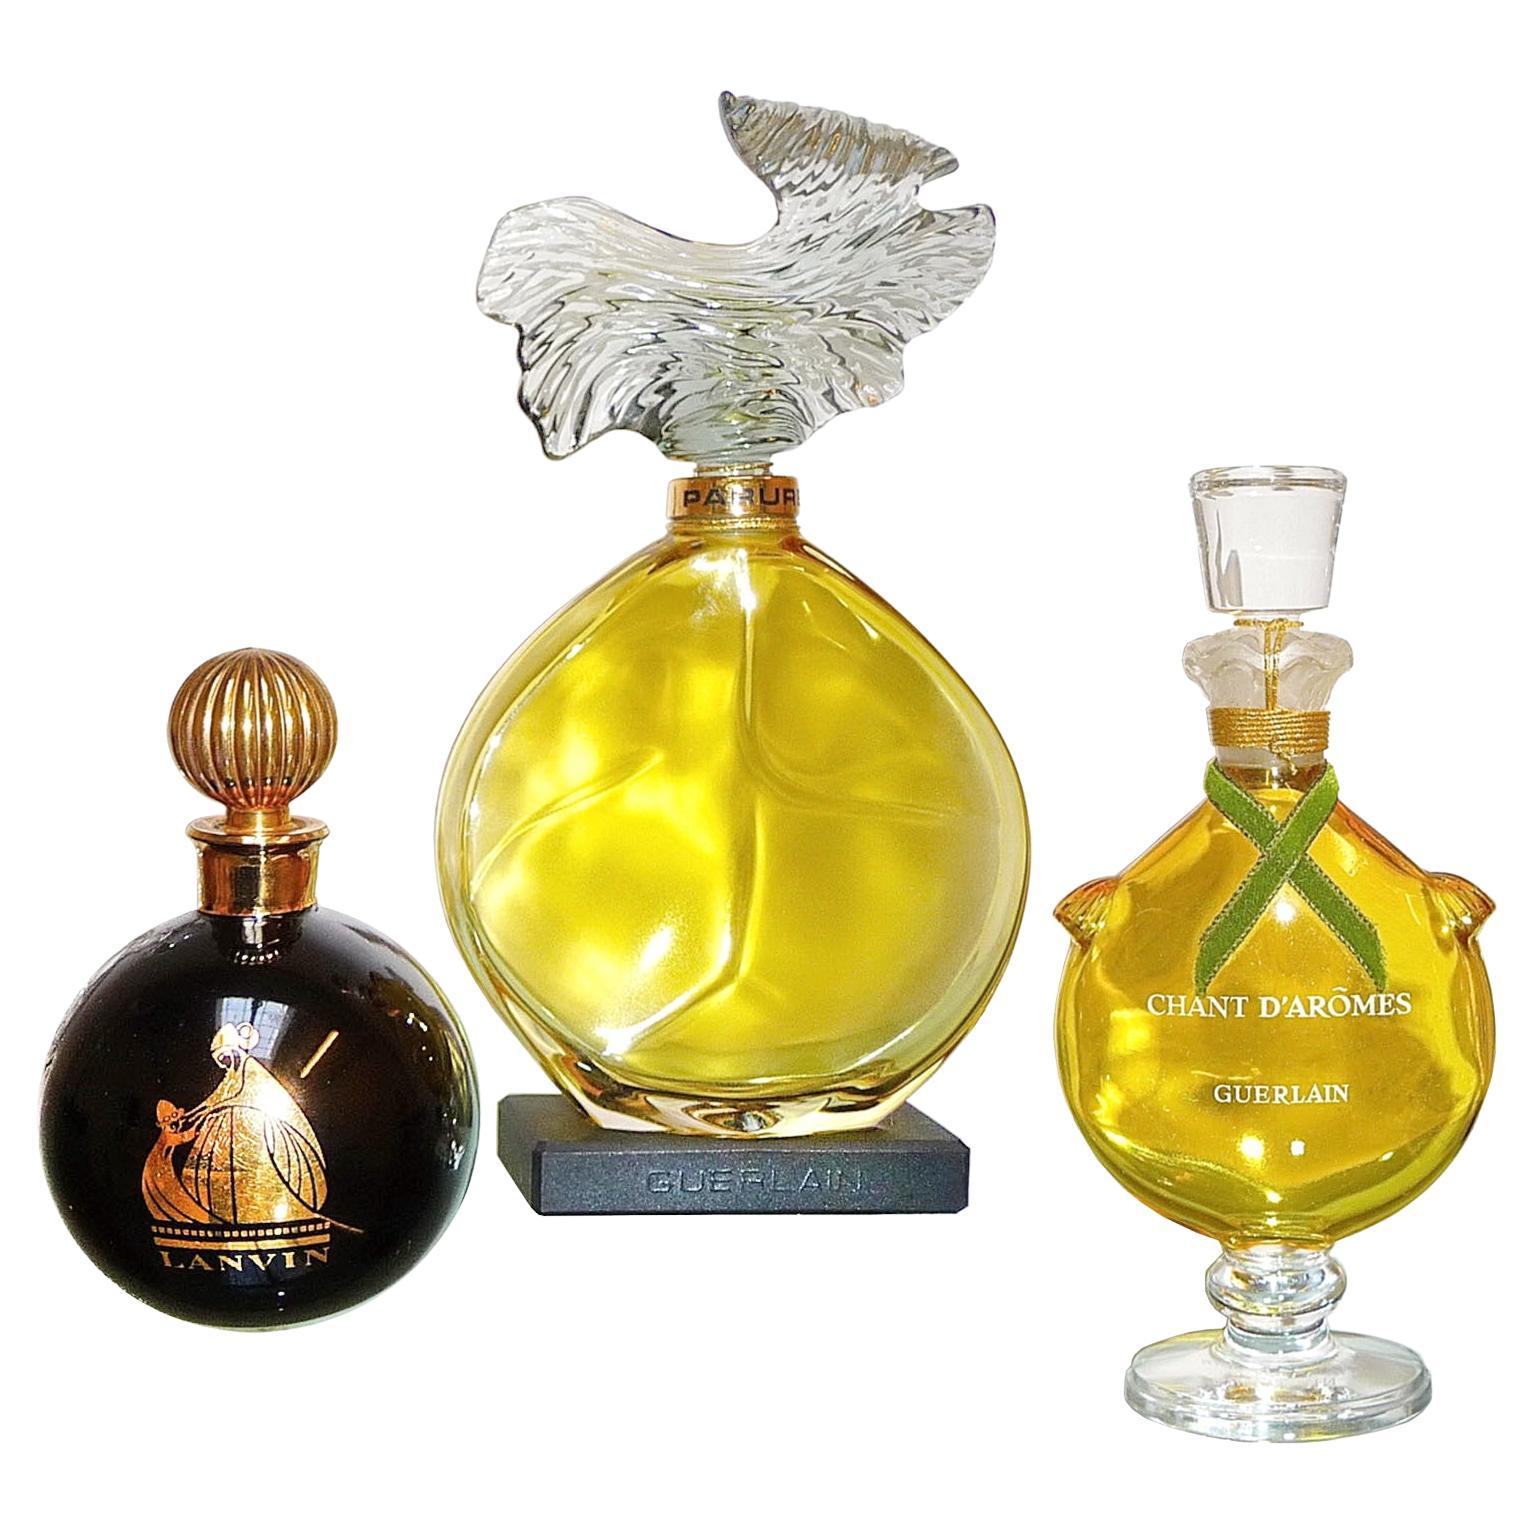 Factice Perfume Guerlain Lanvin Store Display Bottles For Sale